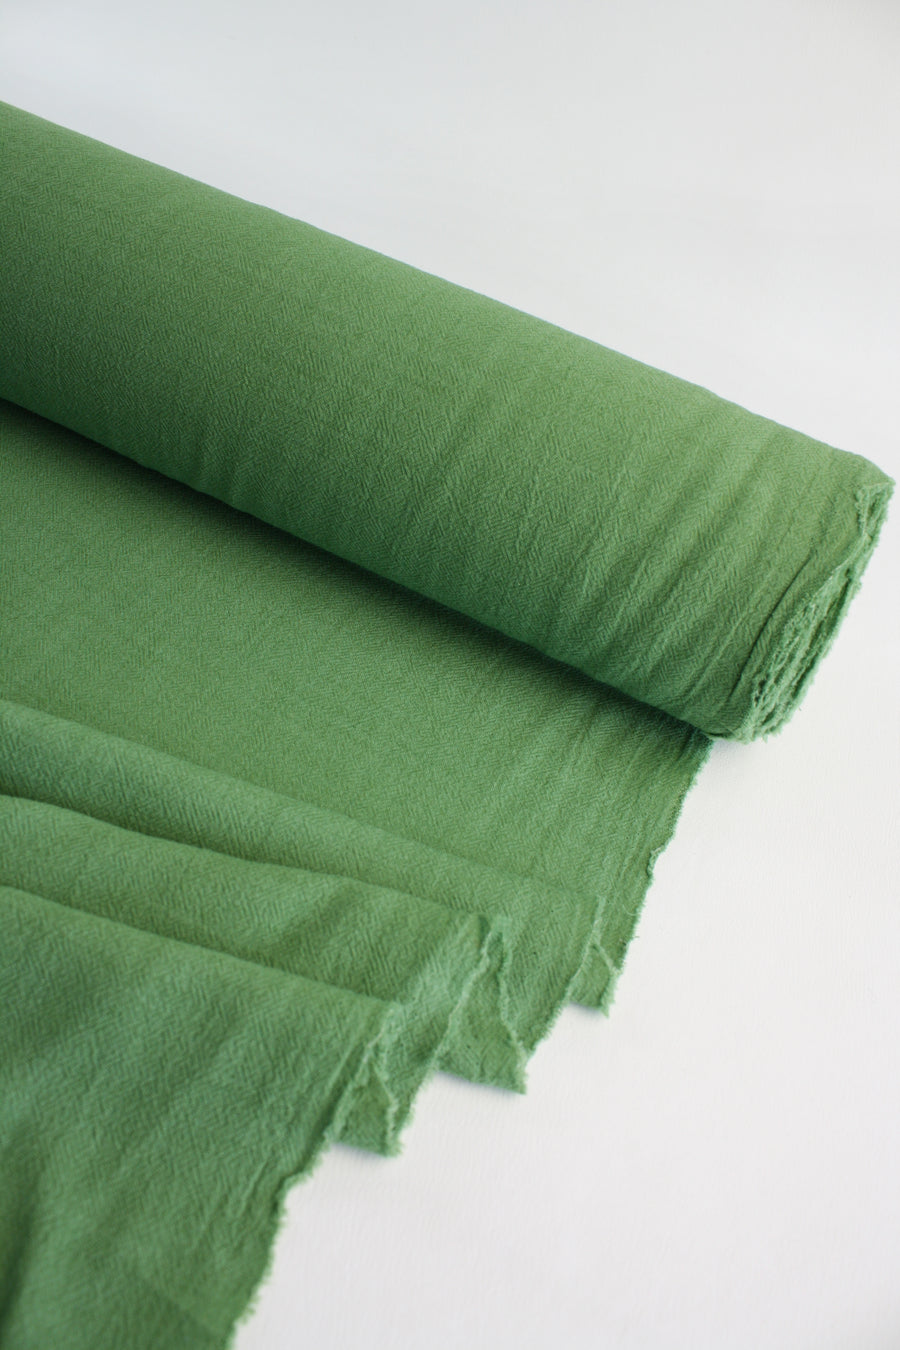 Ottorino - European Wool Crepe | Meadow